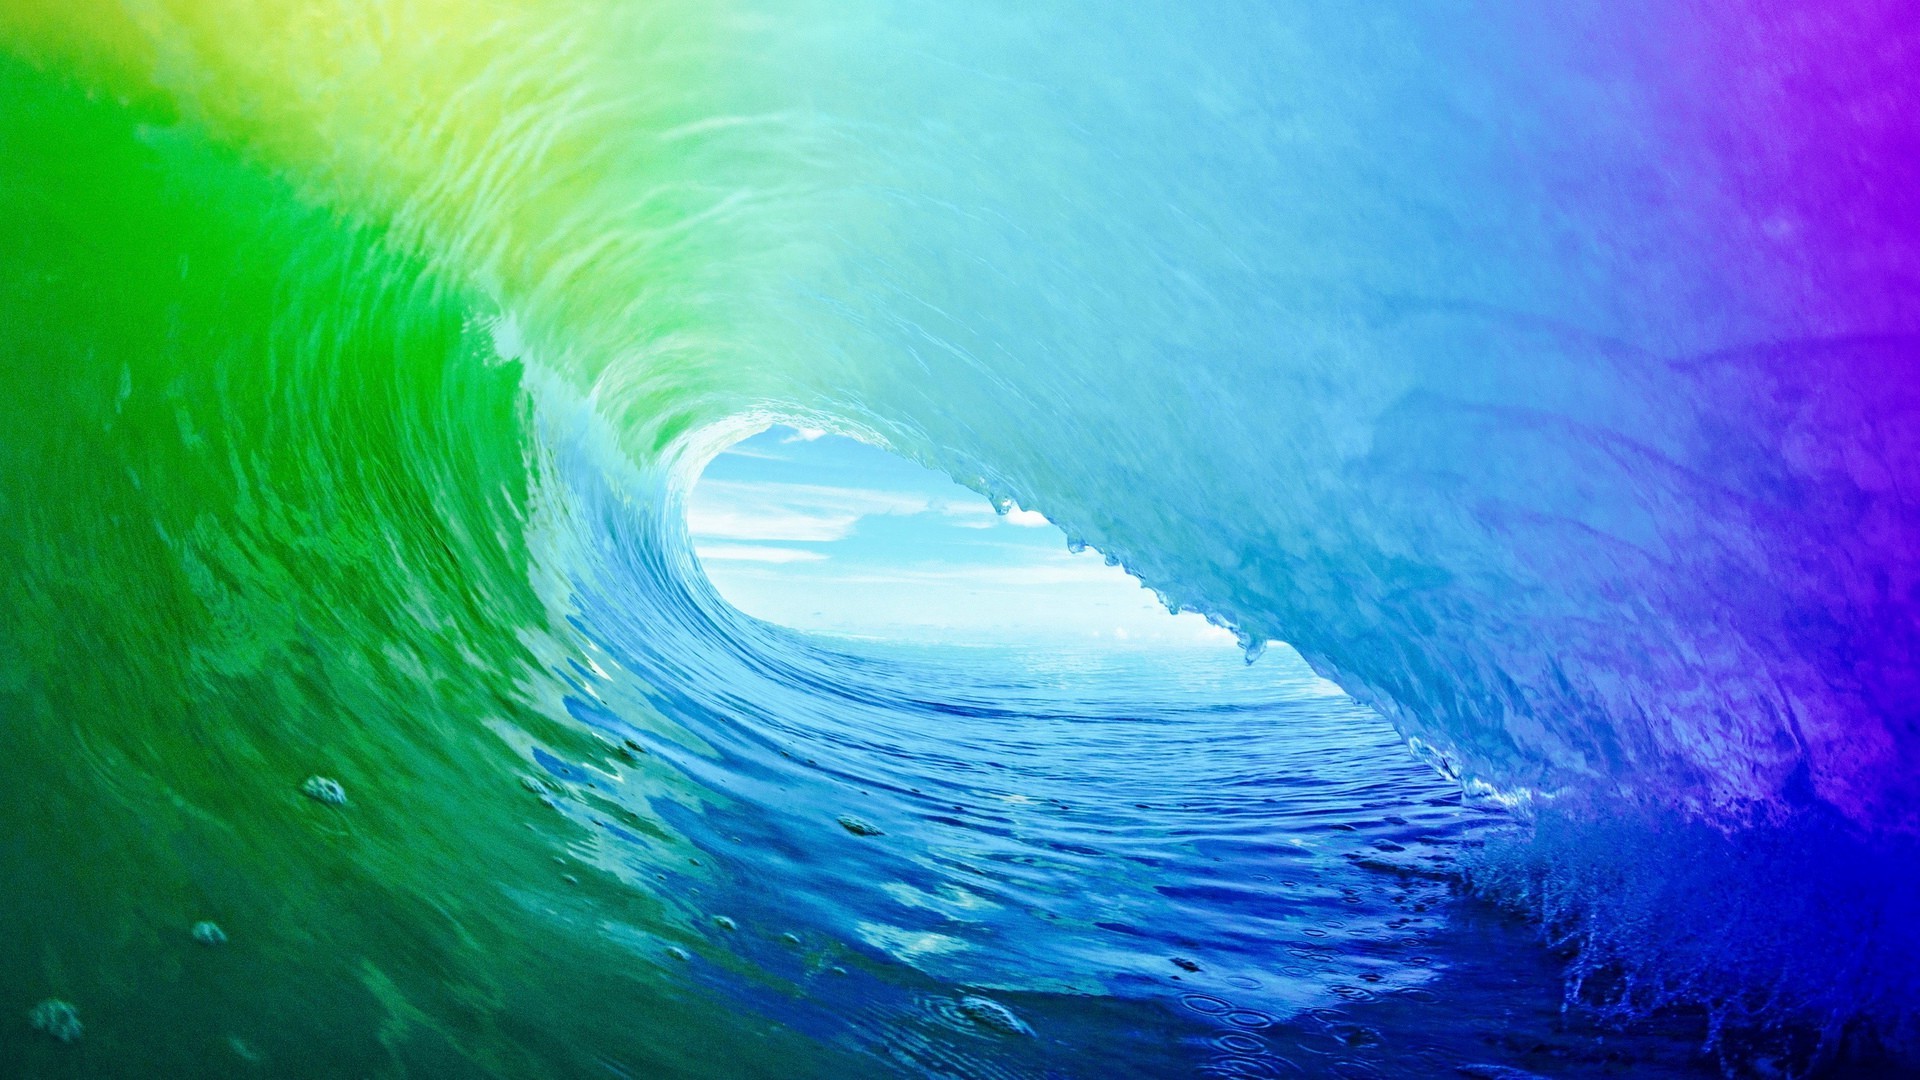 nougat wallpaper 4k,wave,wind wave,blue,water,green